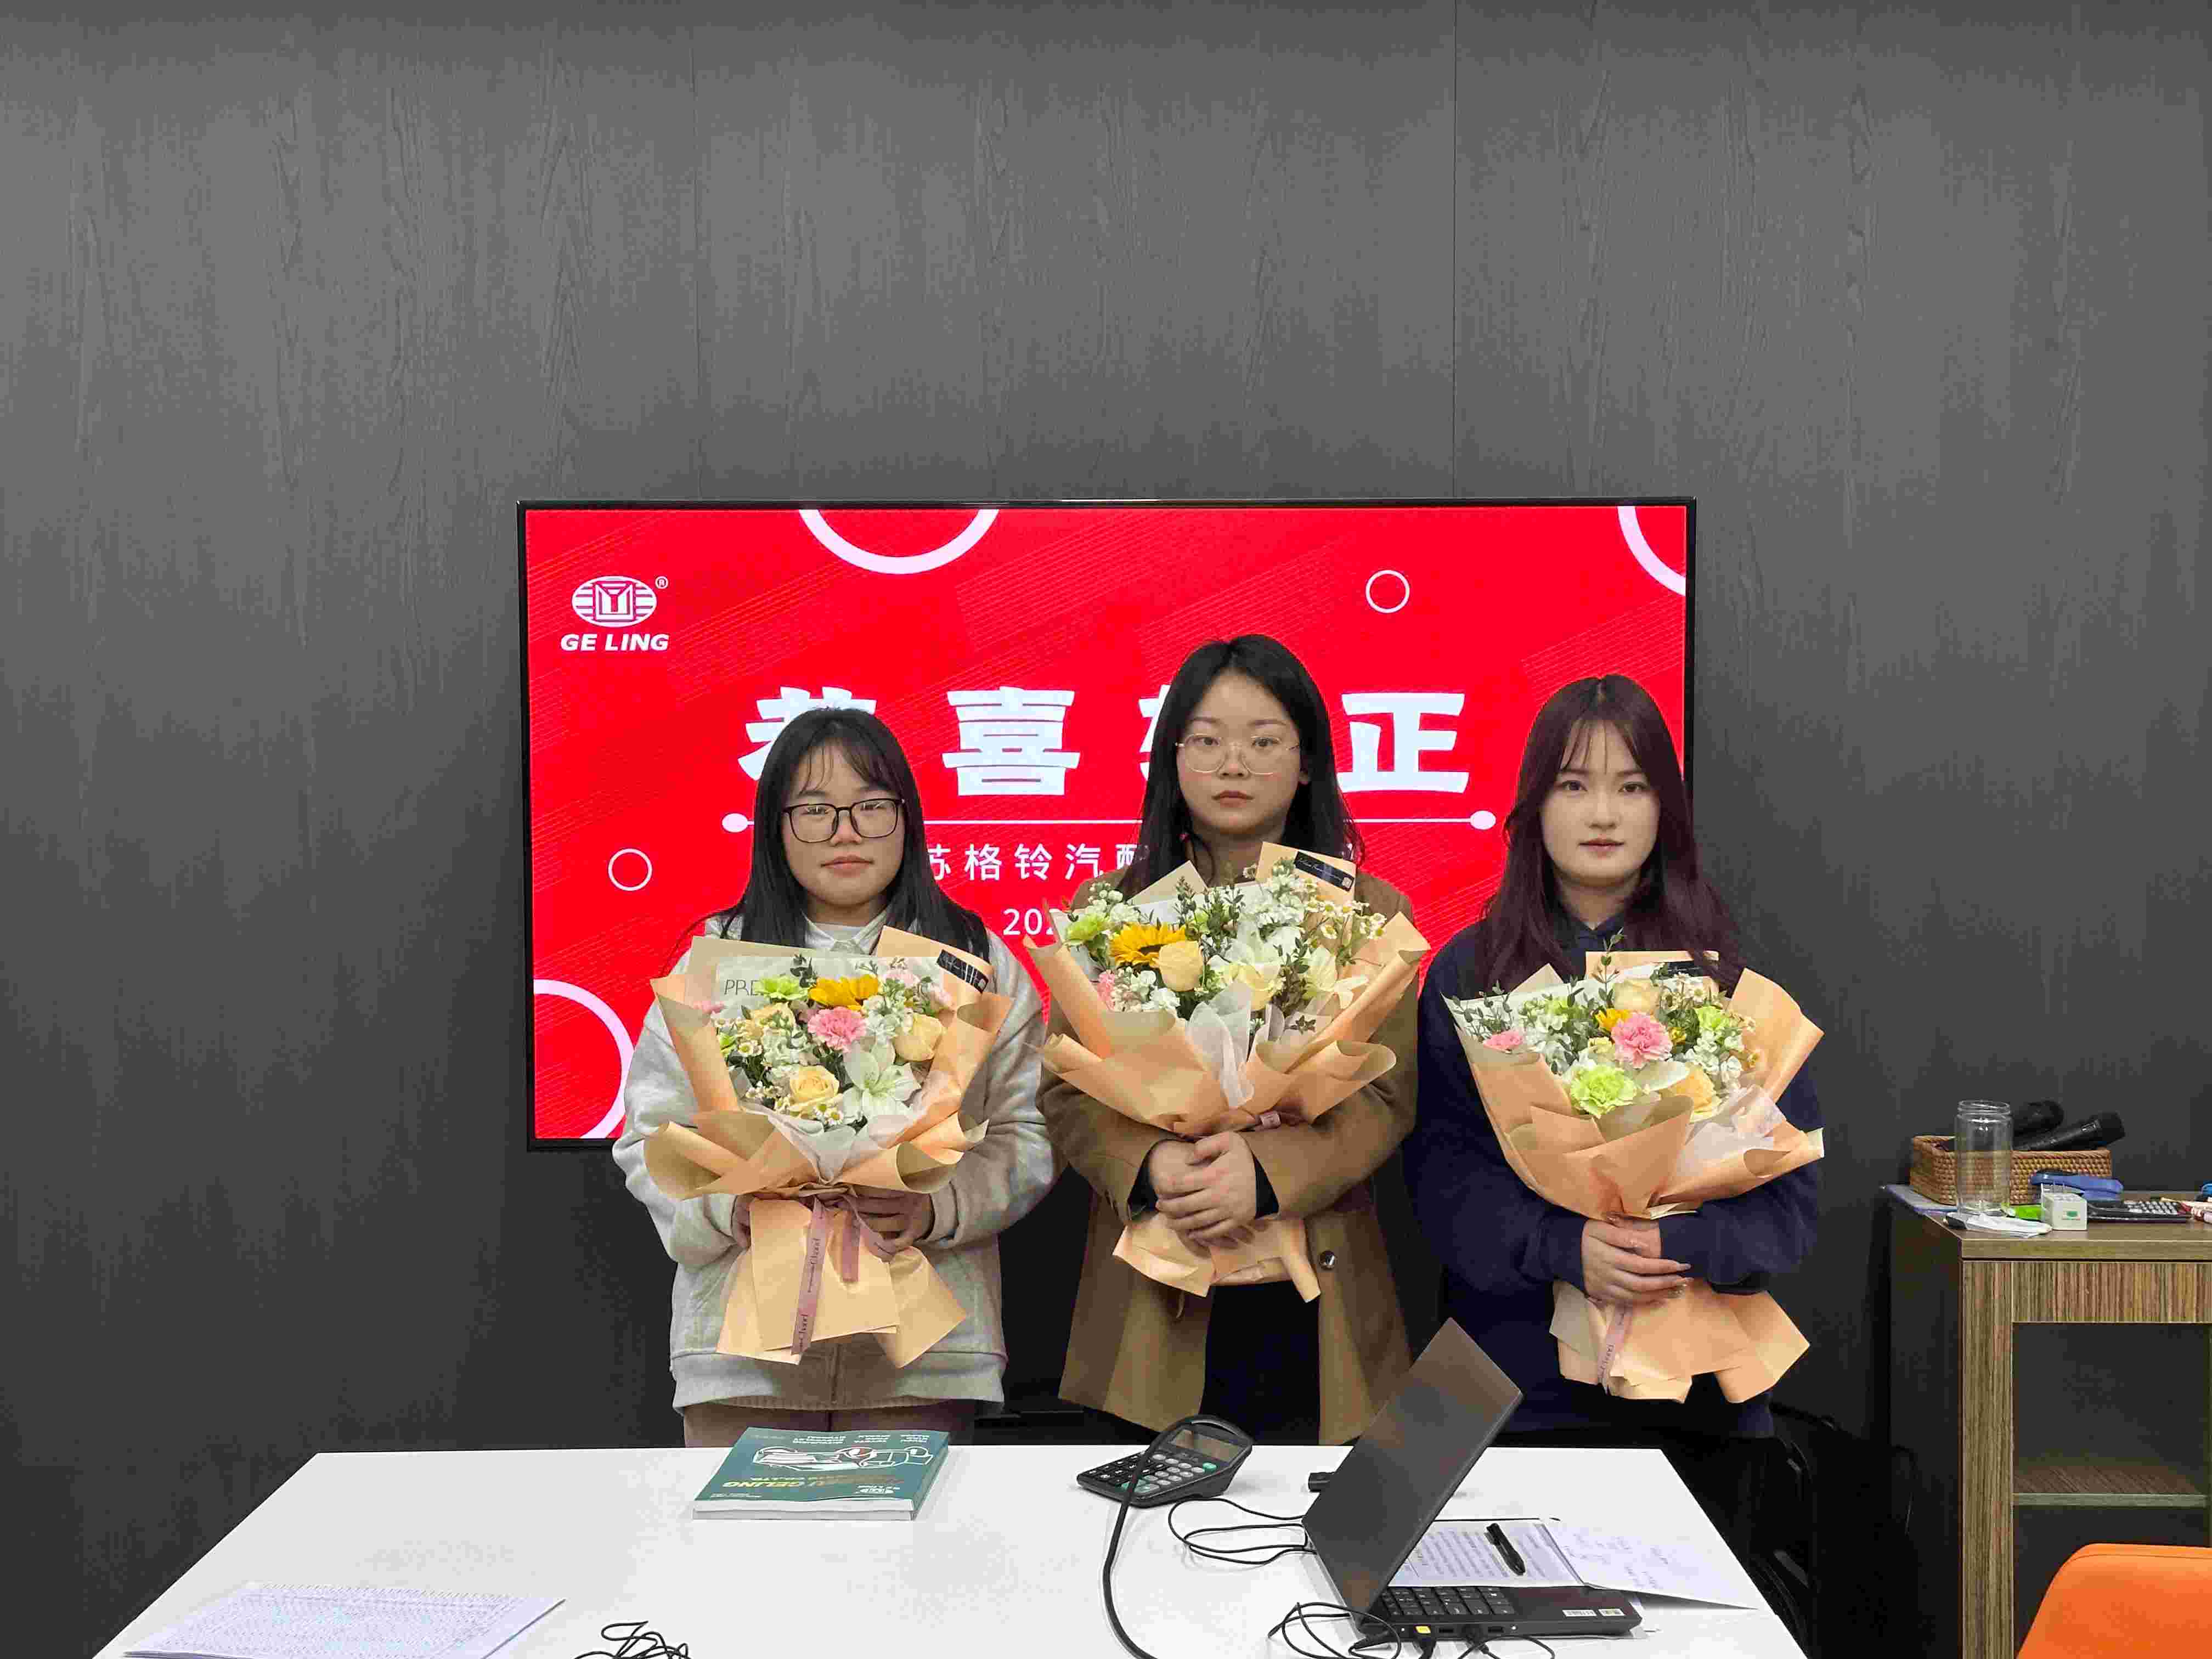 Welcome new colleagues to join JIANGSU GELING